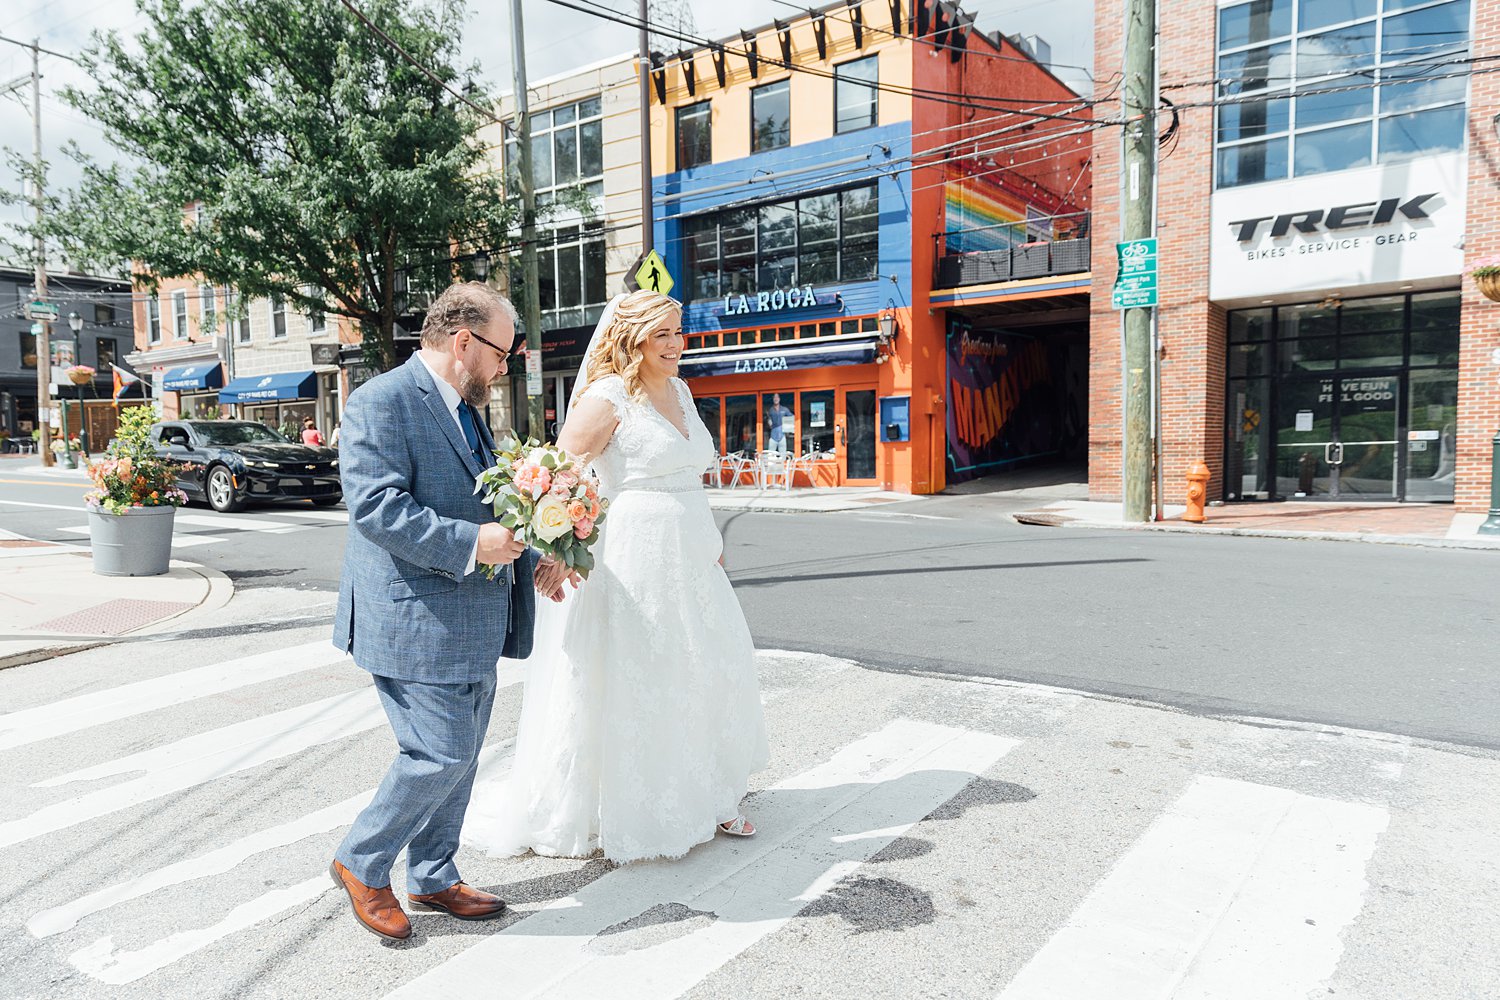 Alex + Sig - Manayunk Brewing Company Wedding - Philadelphia Wedding Photographer - Alison Dunn Photography photo